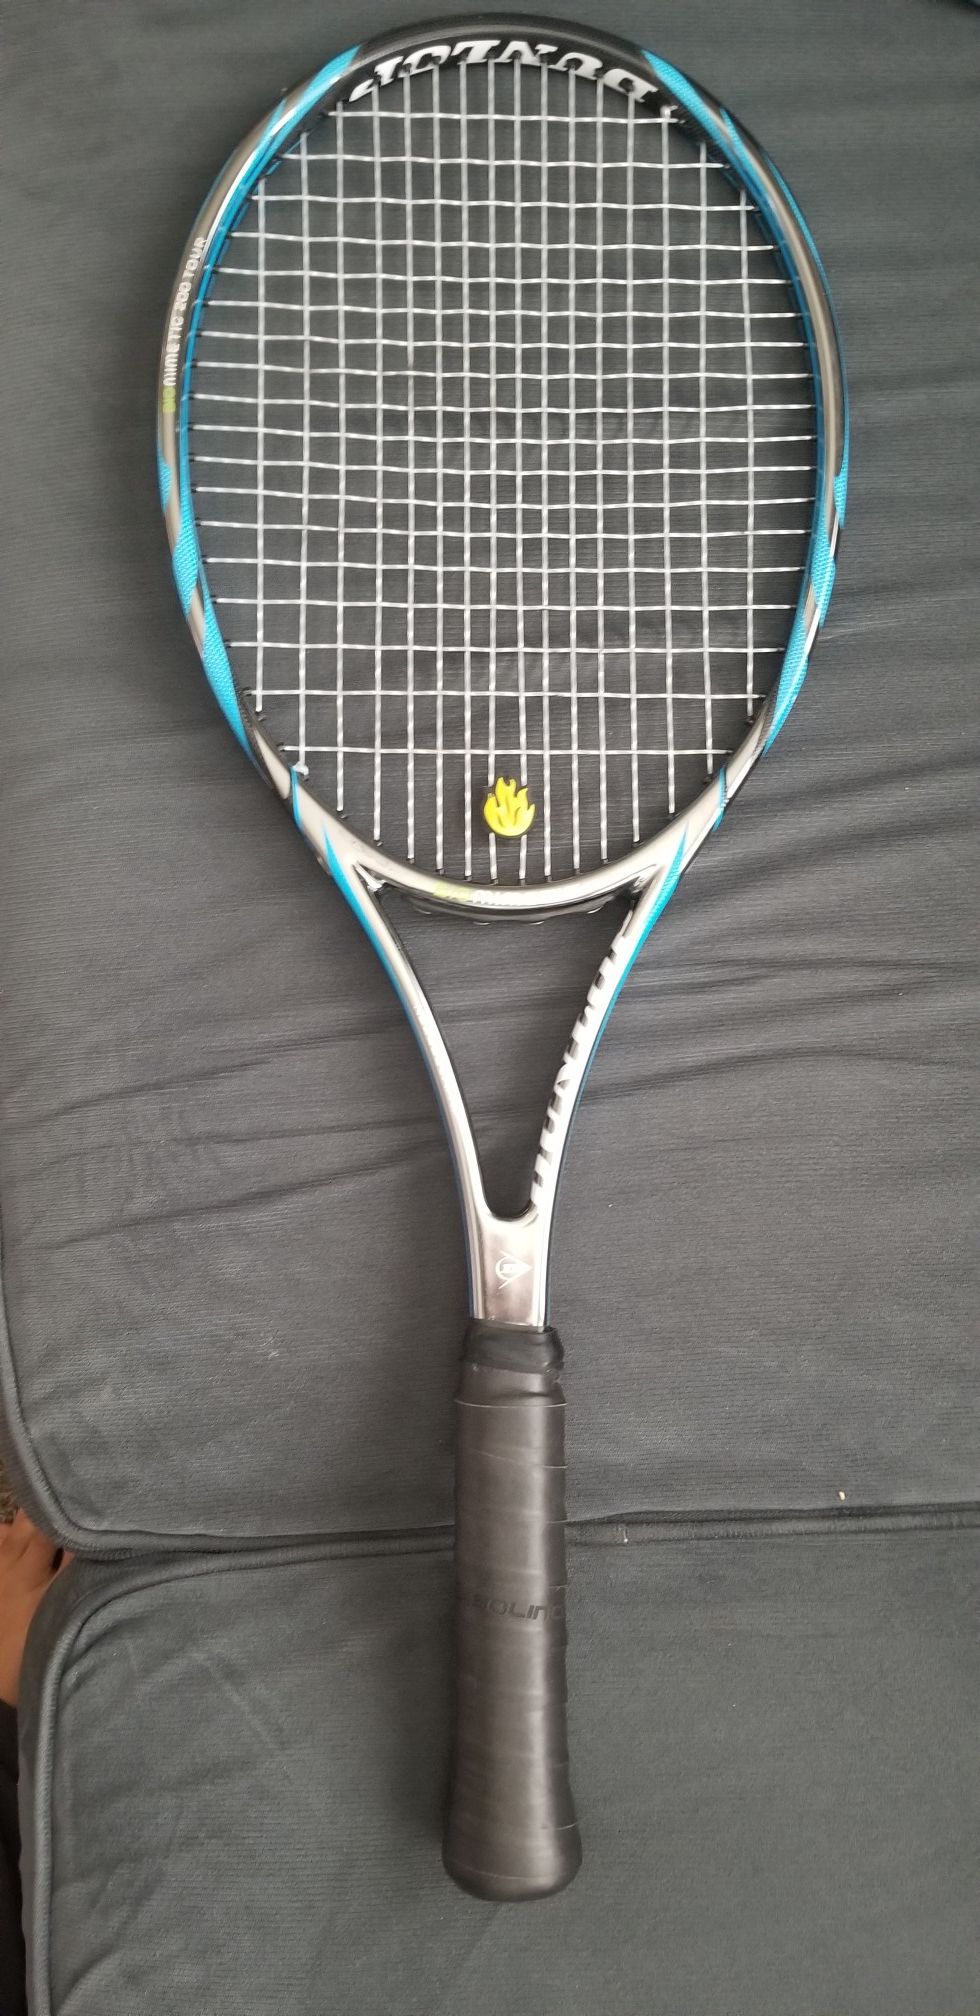 Dunlop Biomimetic 200 Tour tennis racket.